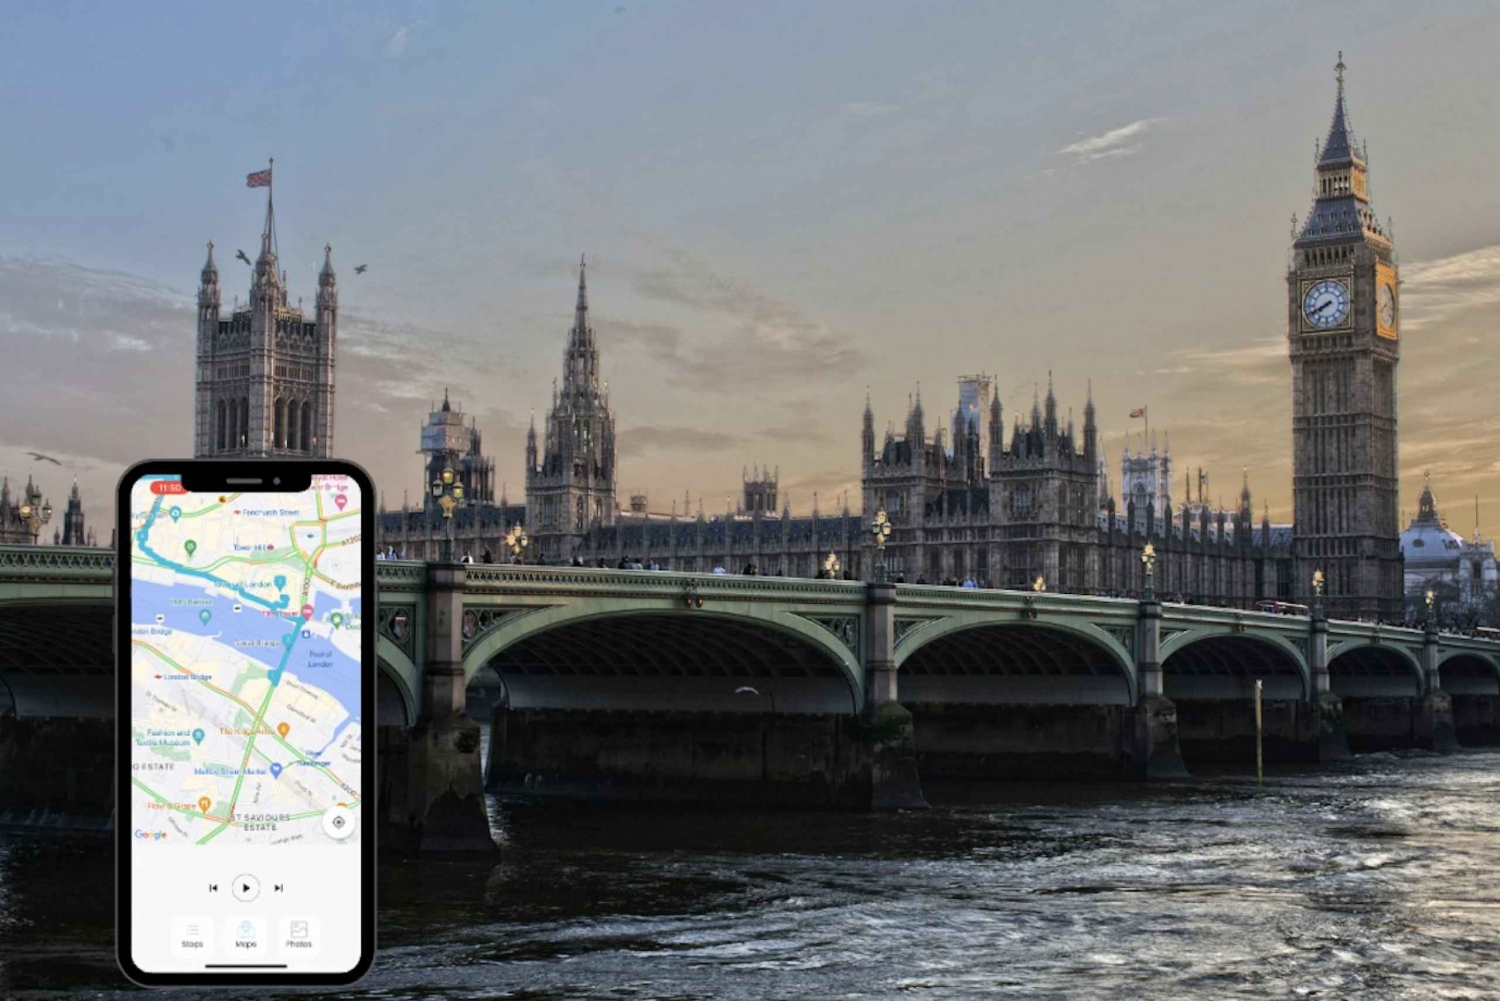 Londen: Highlights self-guided wandeltour met gids met mobiele app